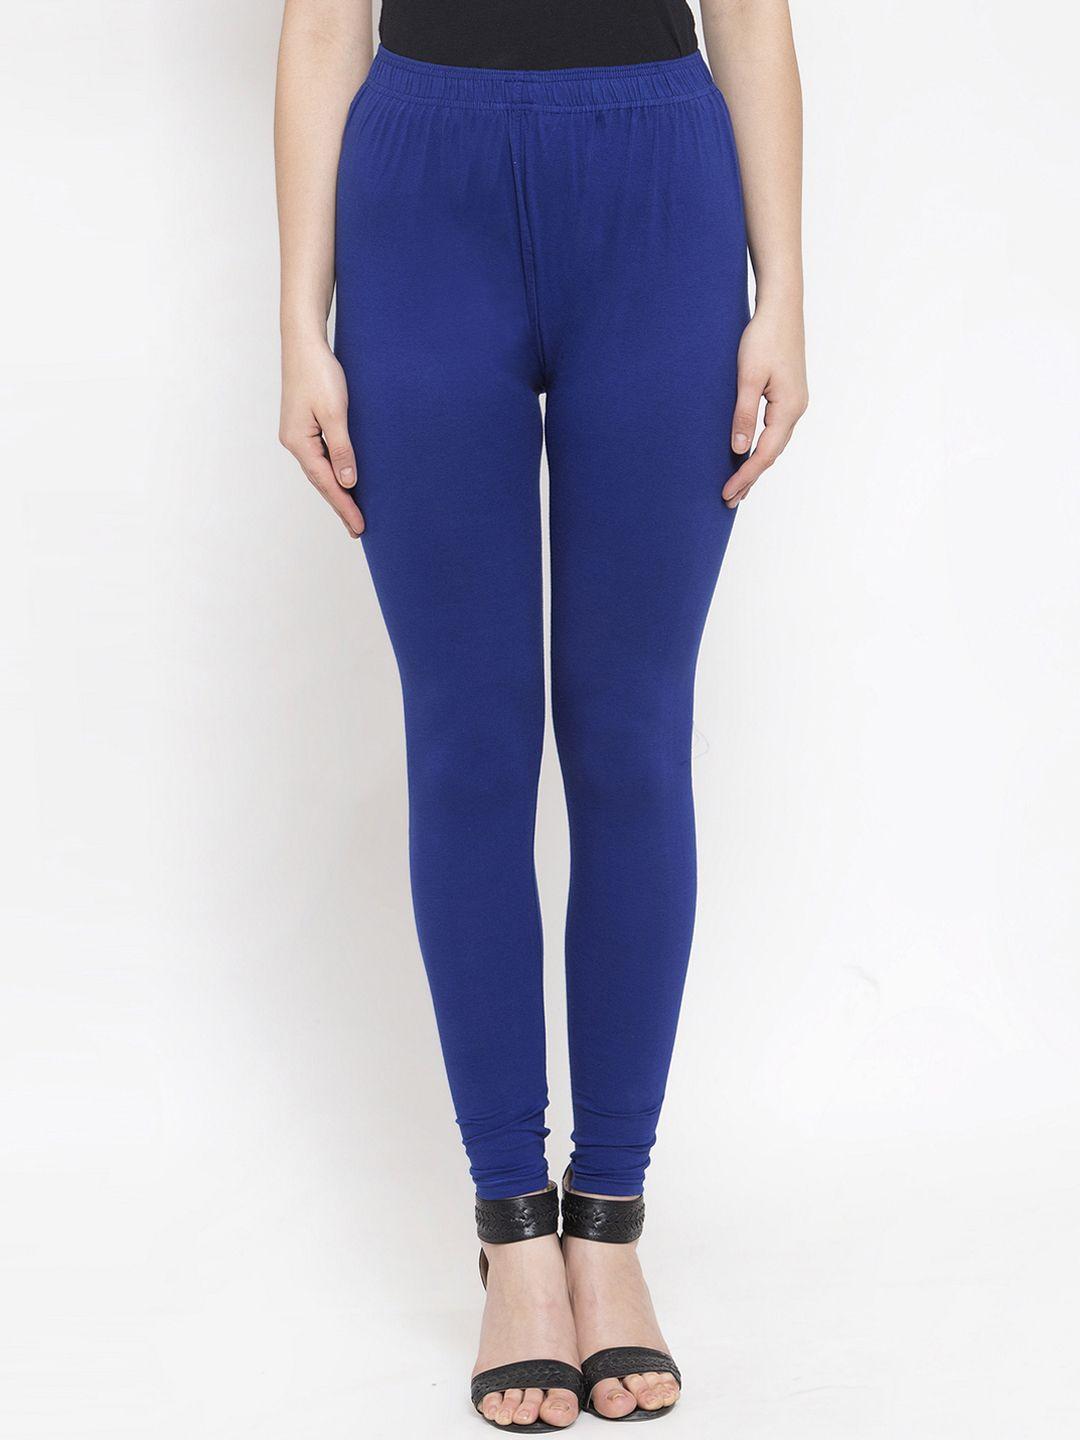 tag 7 women blue solid churidar -length leggings